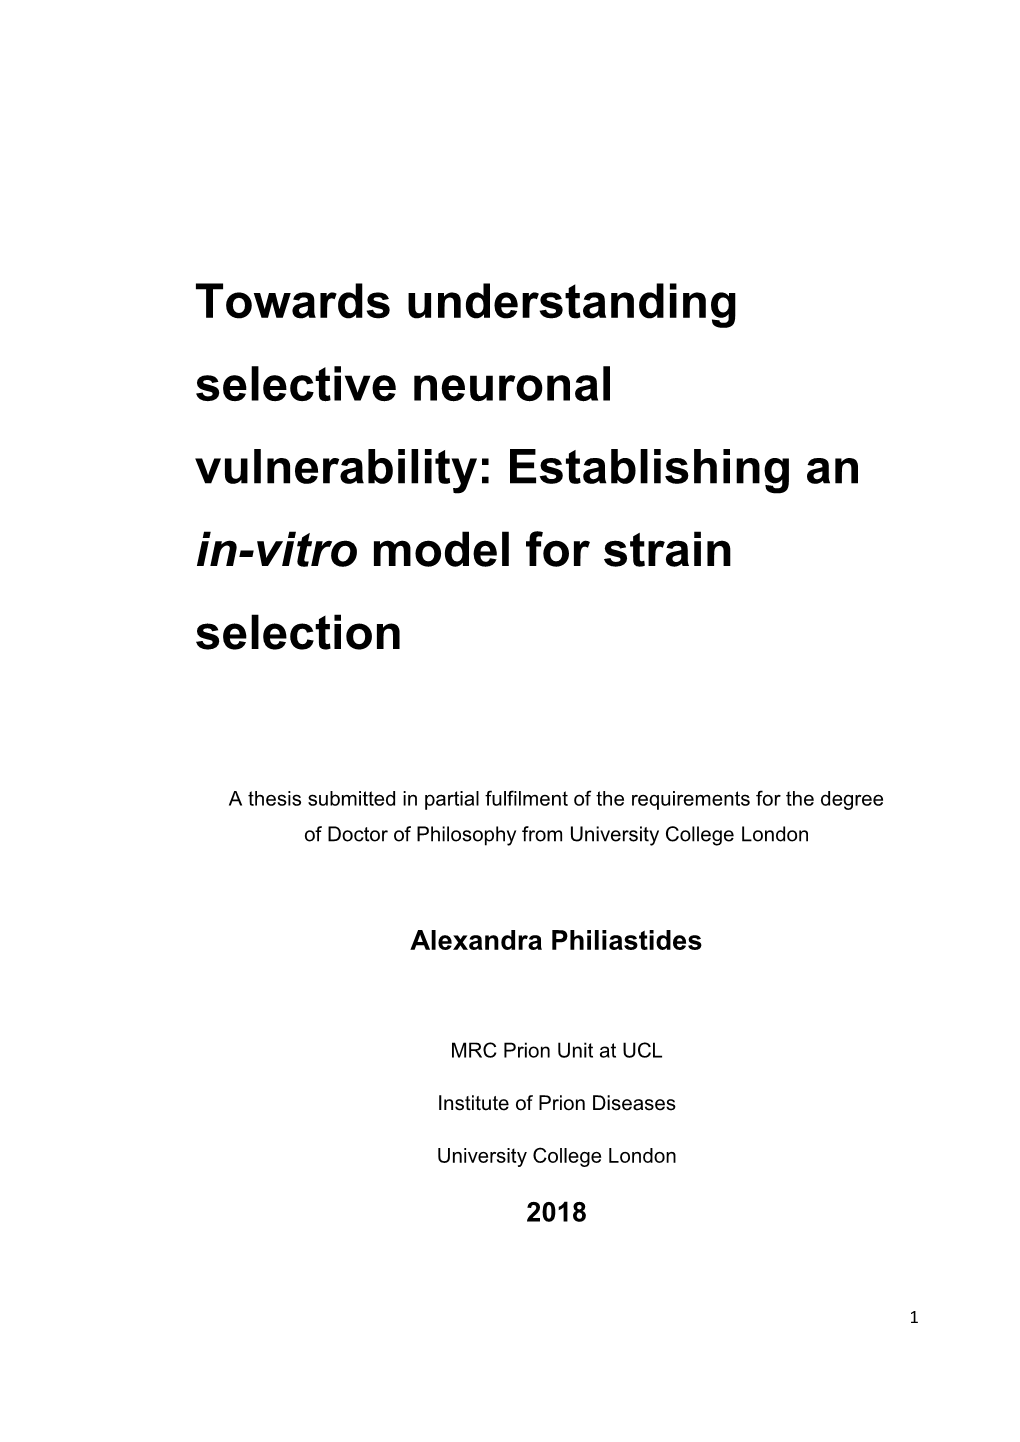 Towards Understanding Selective Neuronal Vulnerability: Establishing an In-Vitro Model for Strain Selection